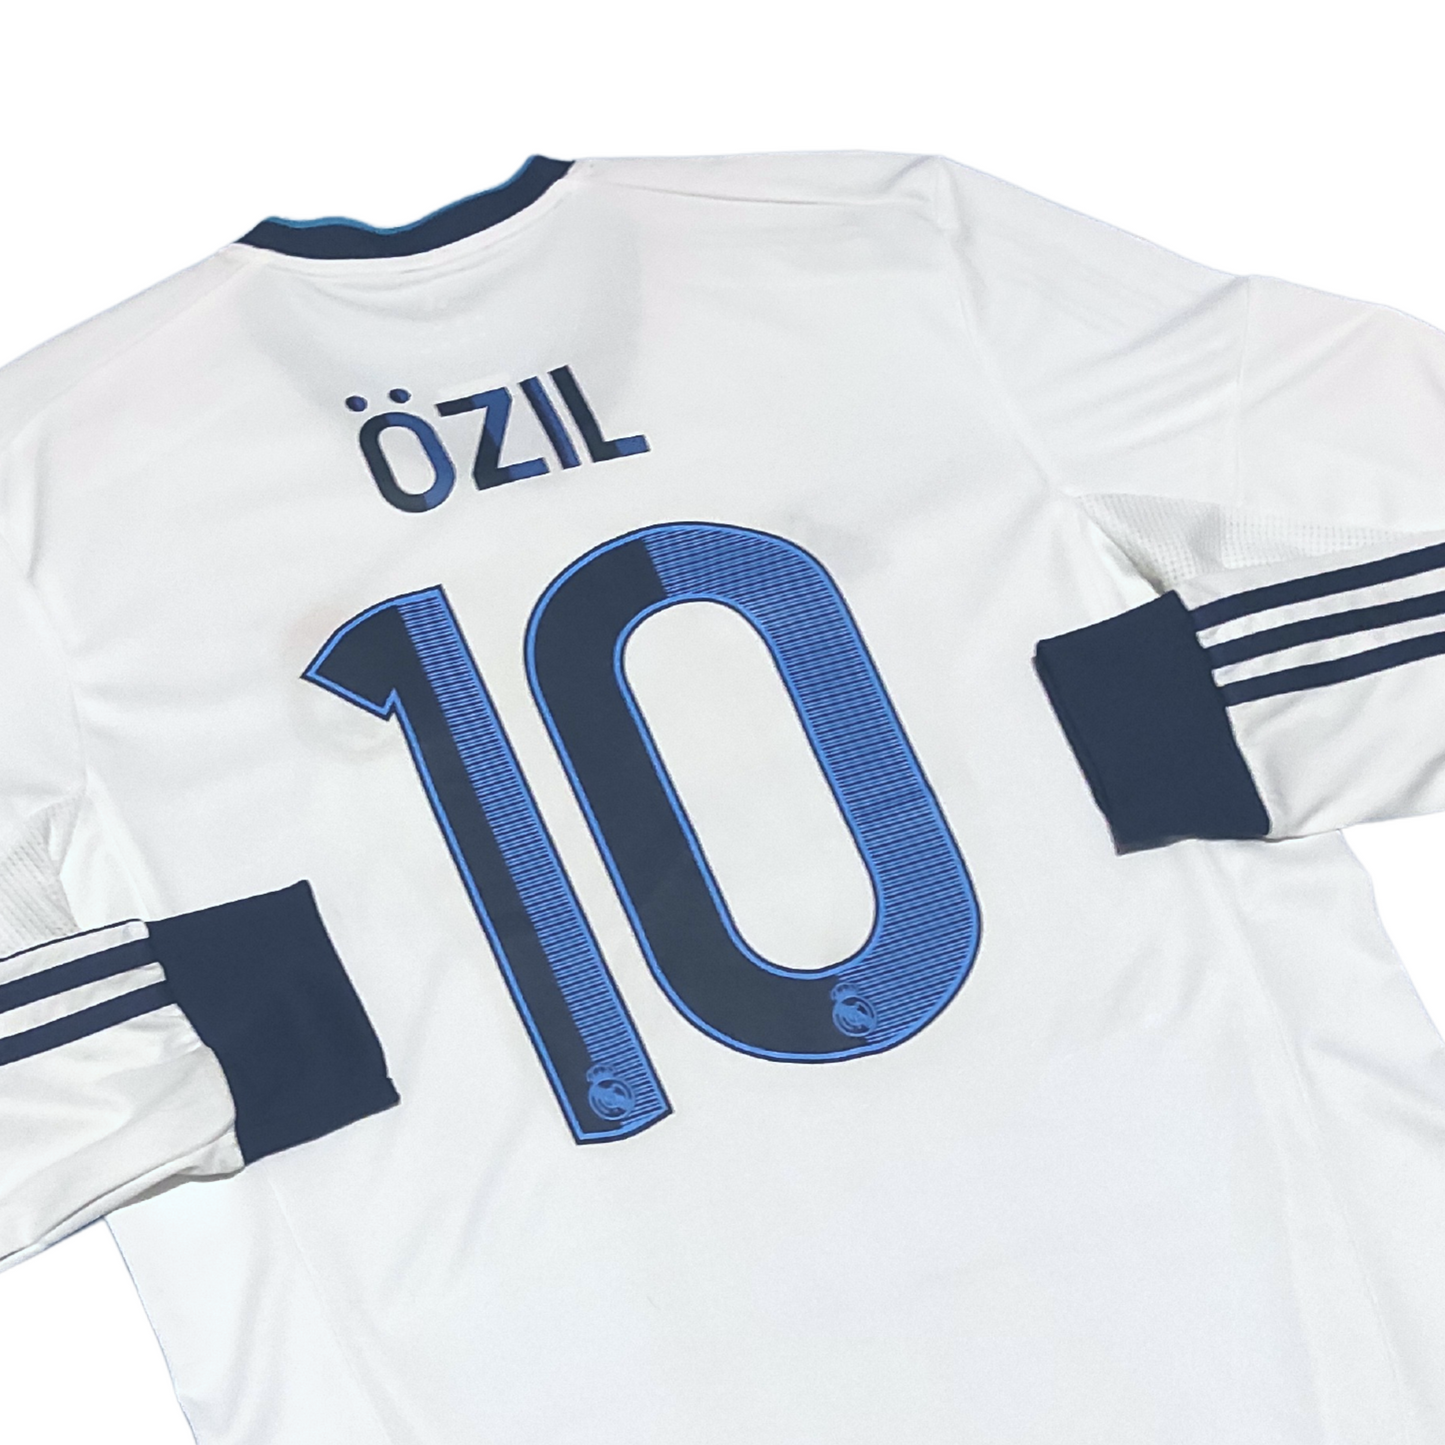 Real Madrid Home L/S Shirt 2012-2013 Ozil (M)